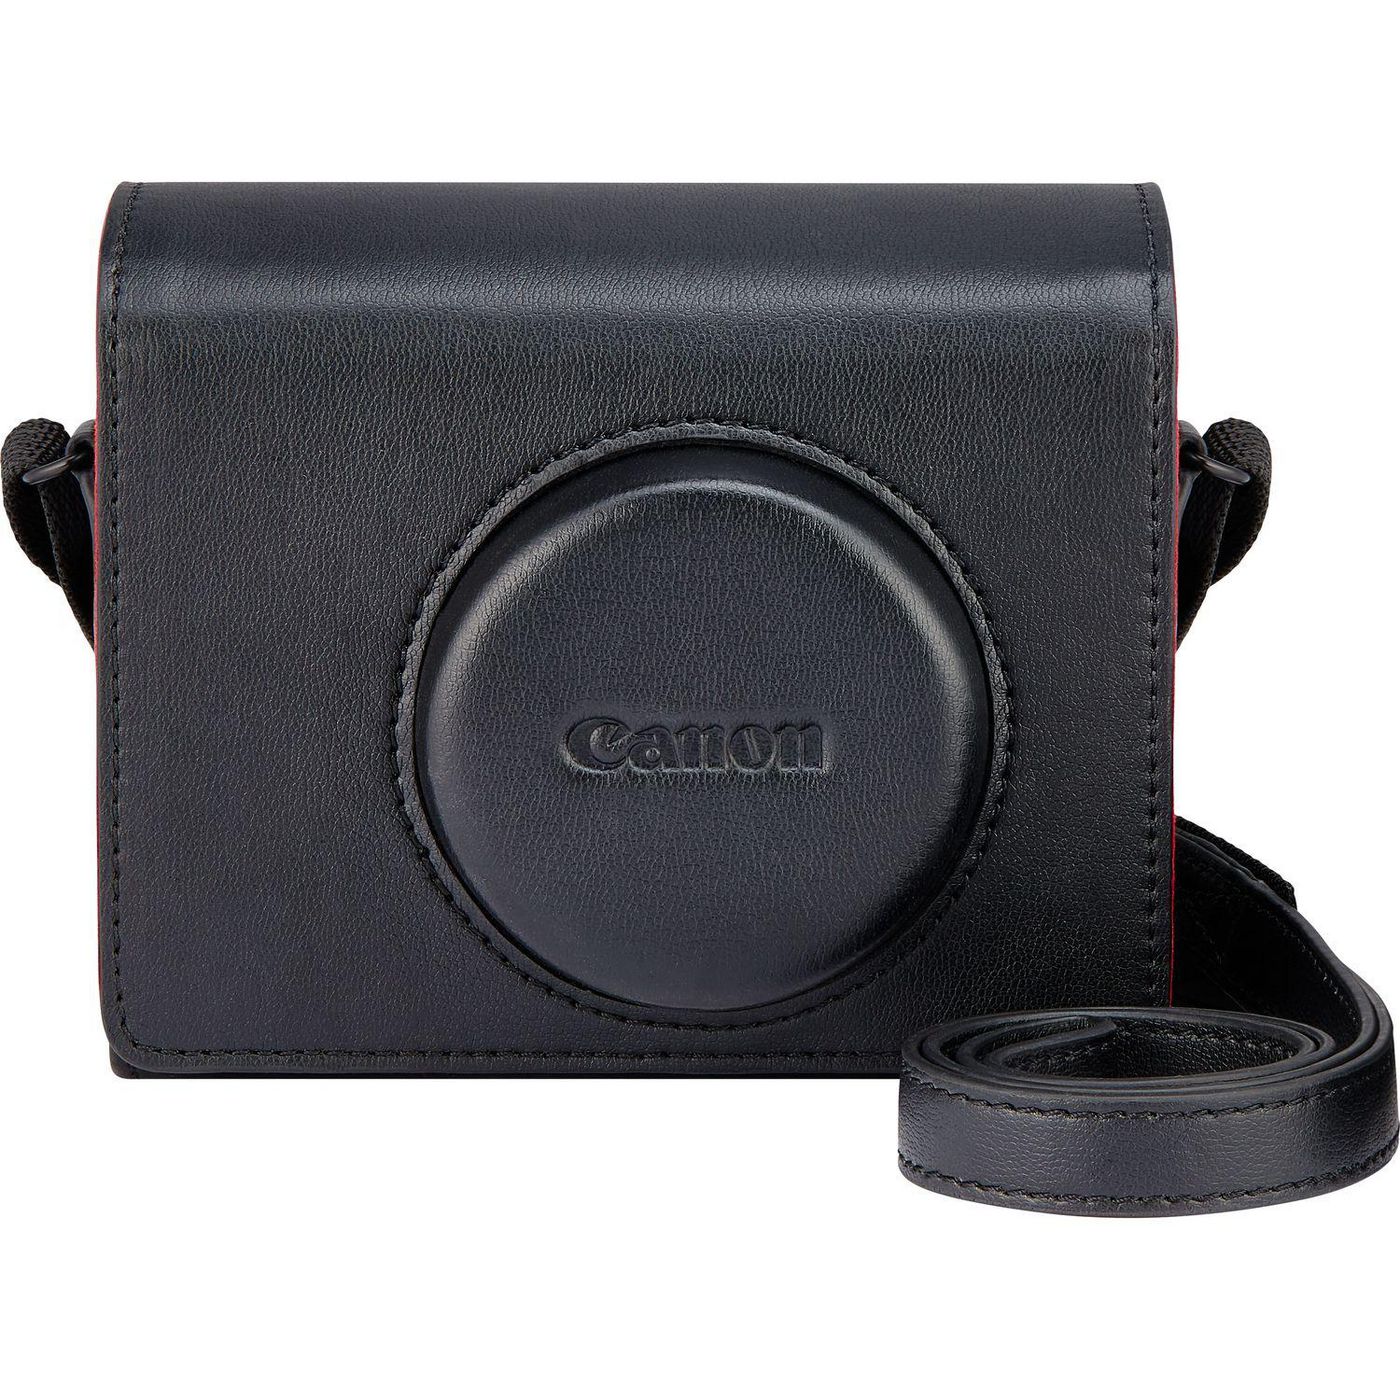 Canon 3074C001 DCC-1830 Leather Bag 